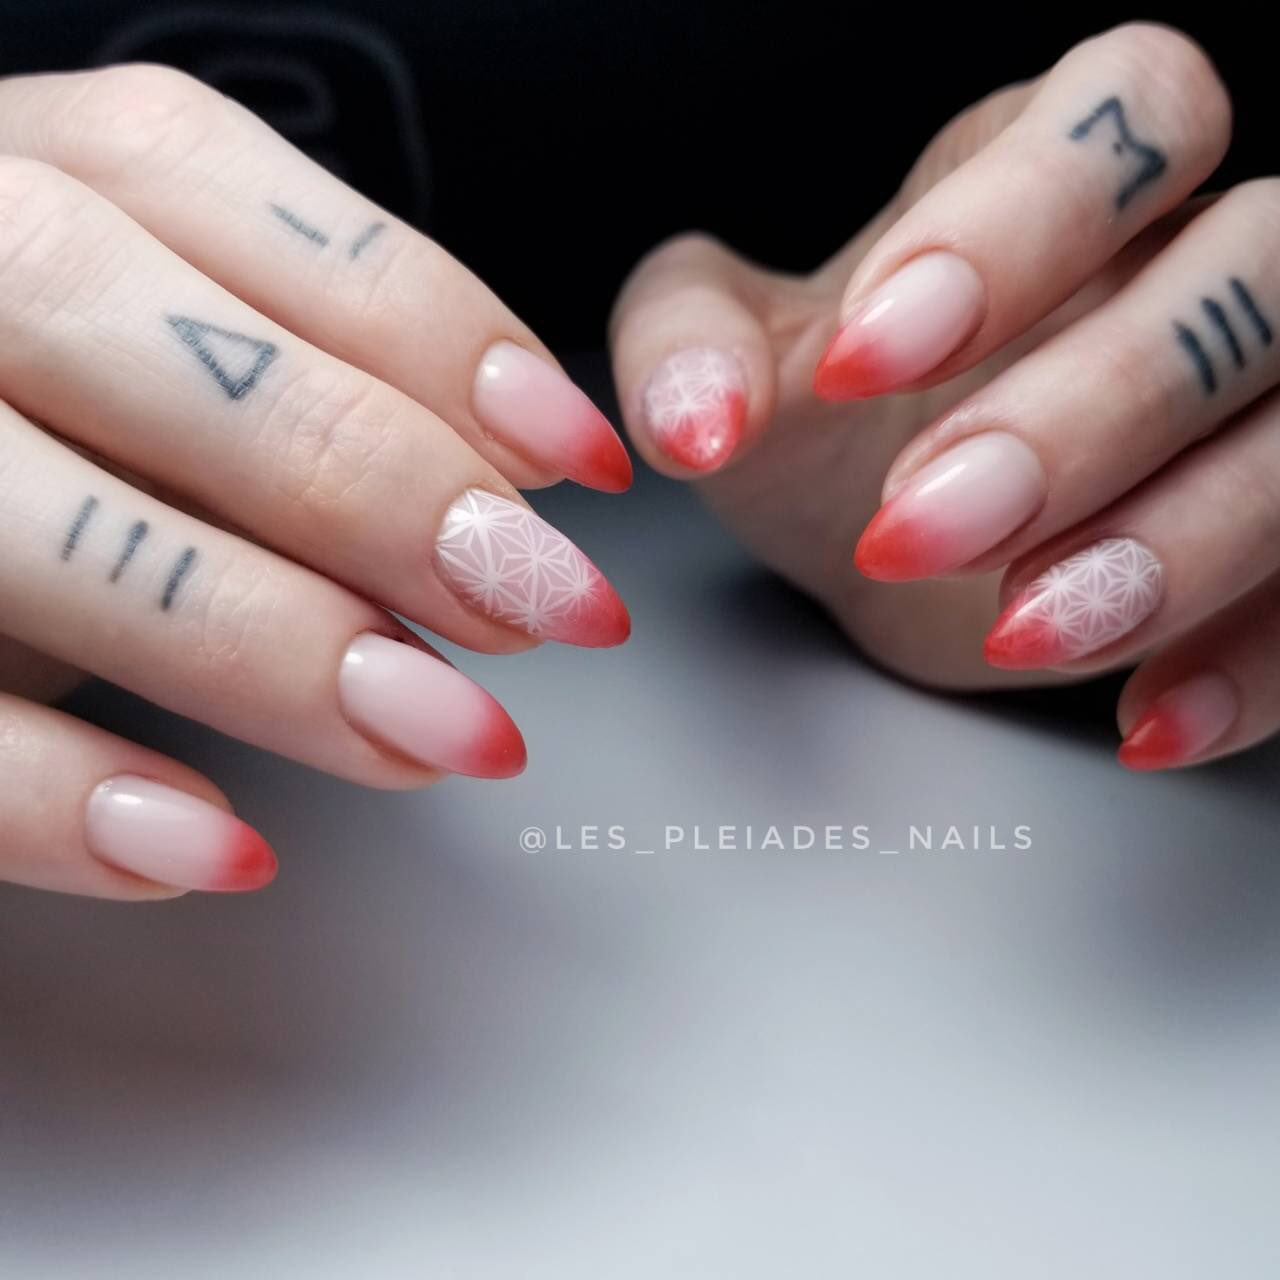 Les Pleiades Nails Pleiadesnails Twitter